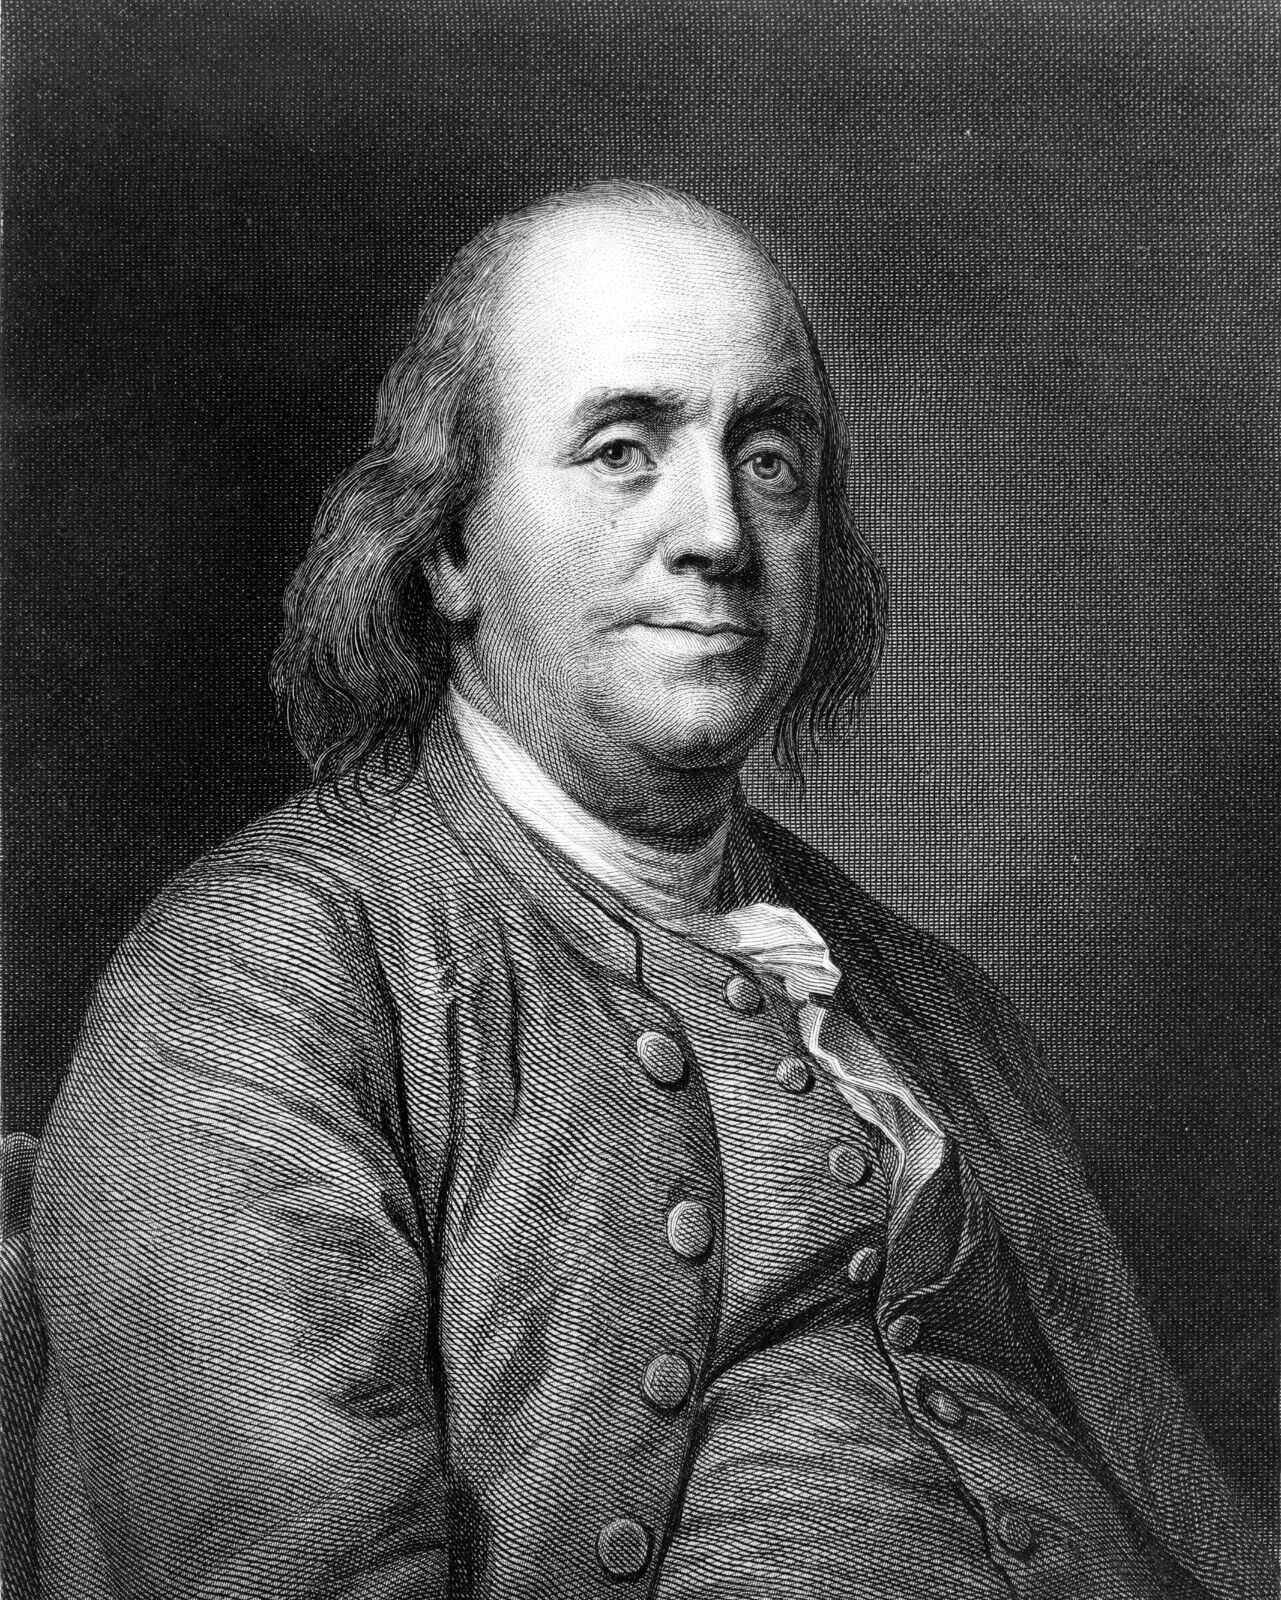 Benjamin Ben Franklin Founding Fathers U.S. American History 8 x 10 Photo fs2